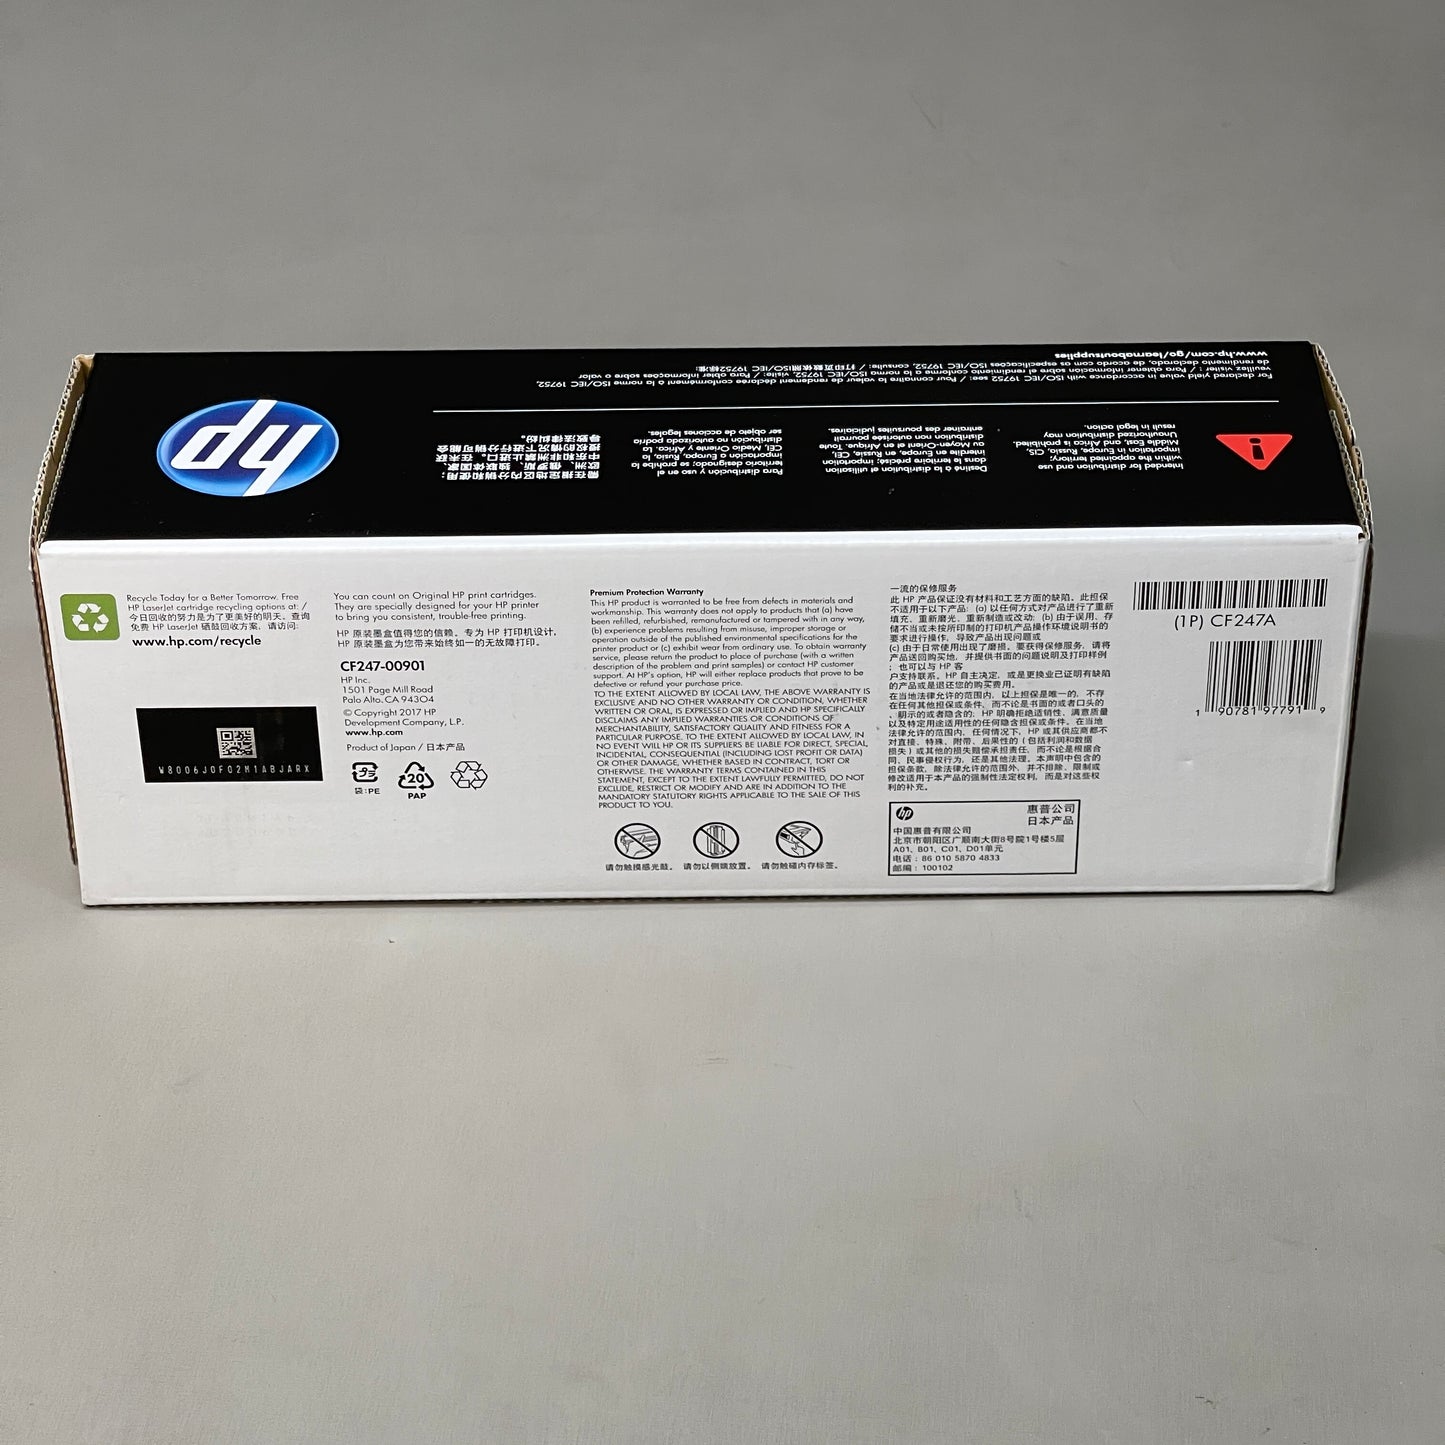 HP LASERJET Toner Cartridge Genuine OEM (for M15, M16, M28, M29) 47A CF247A Black (New)